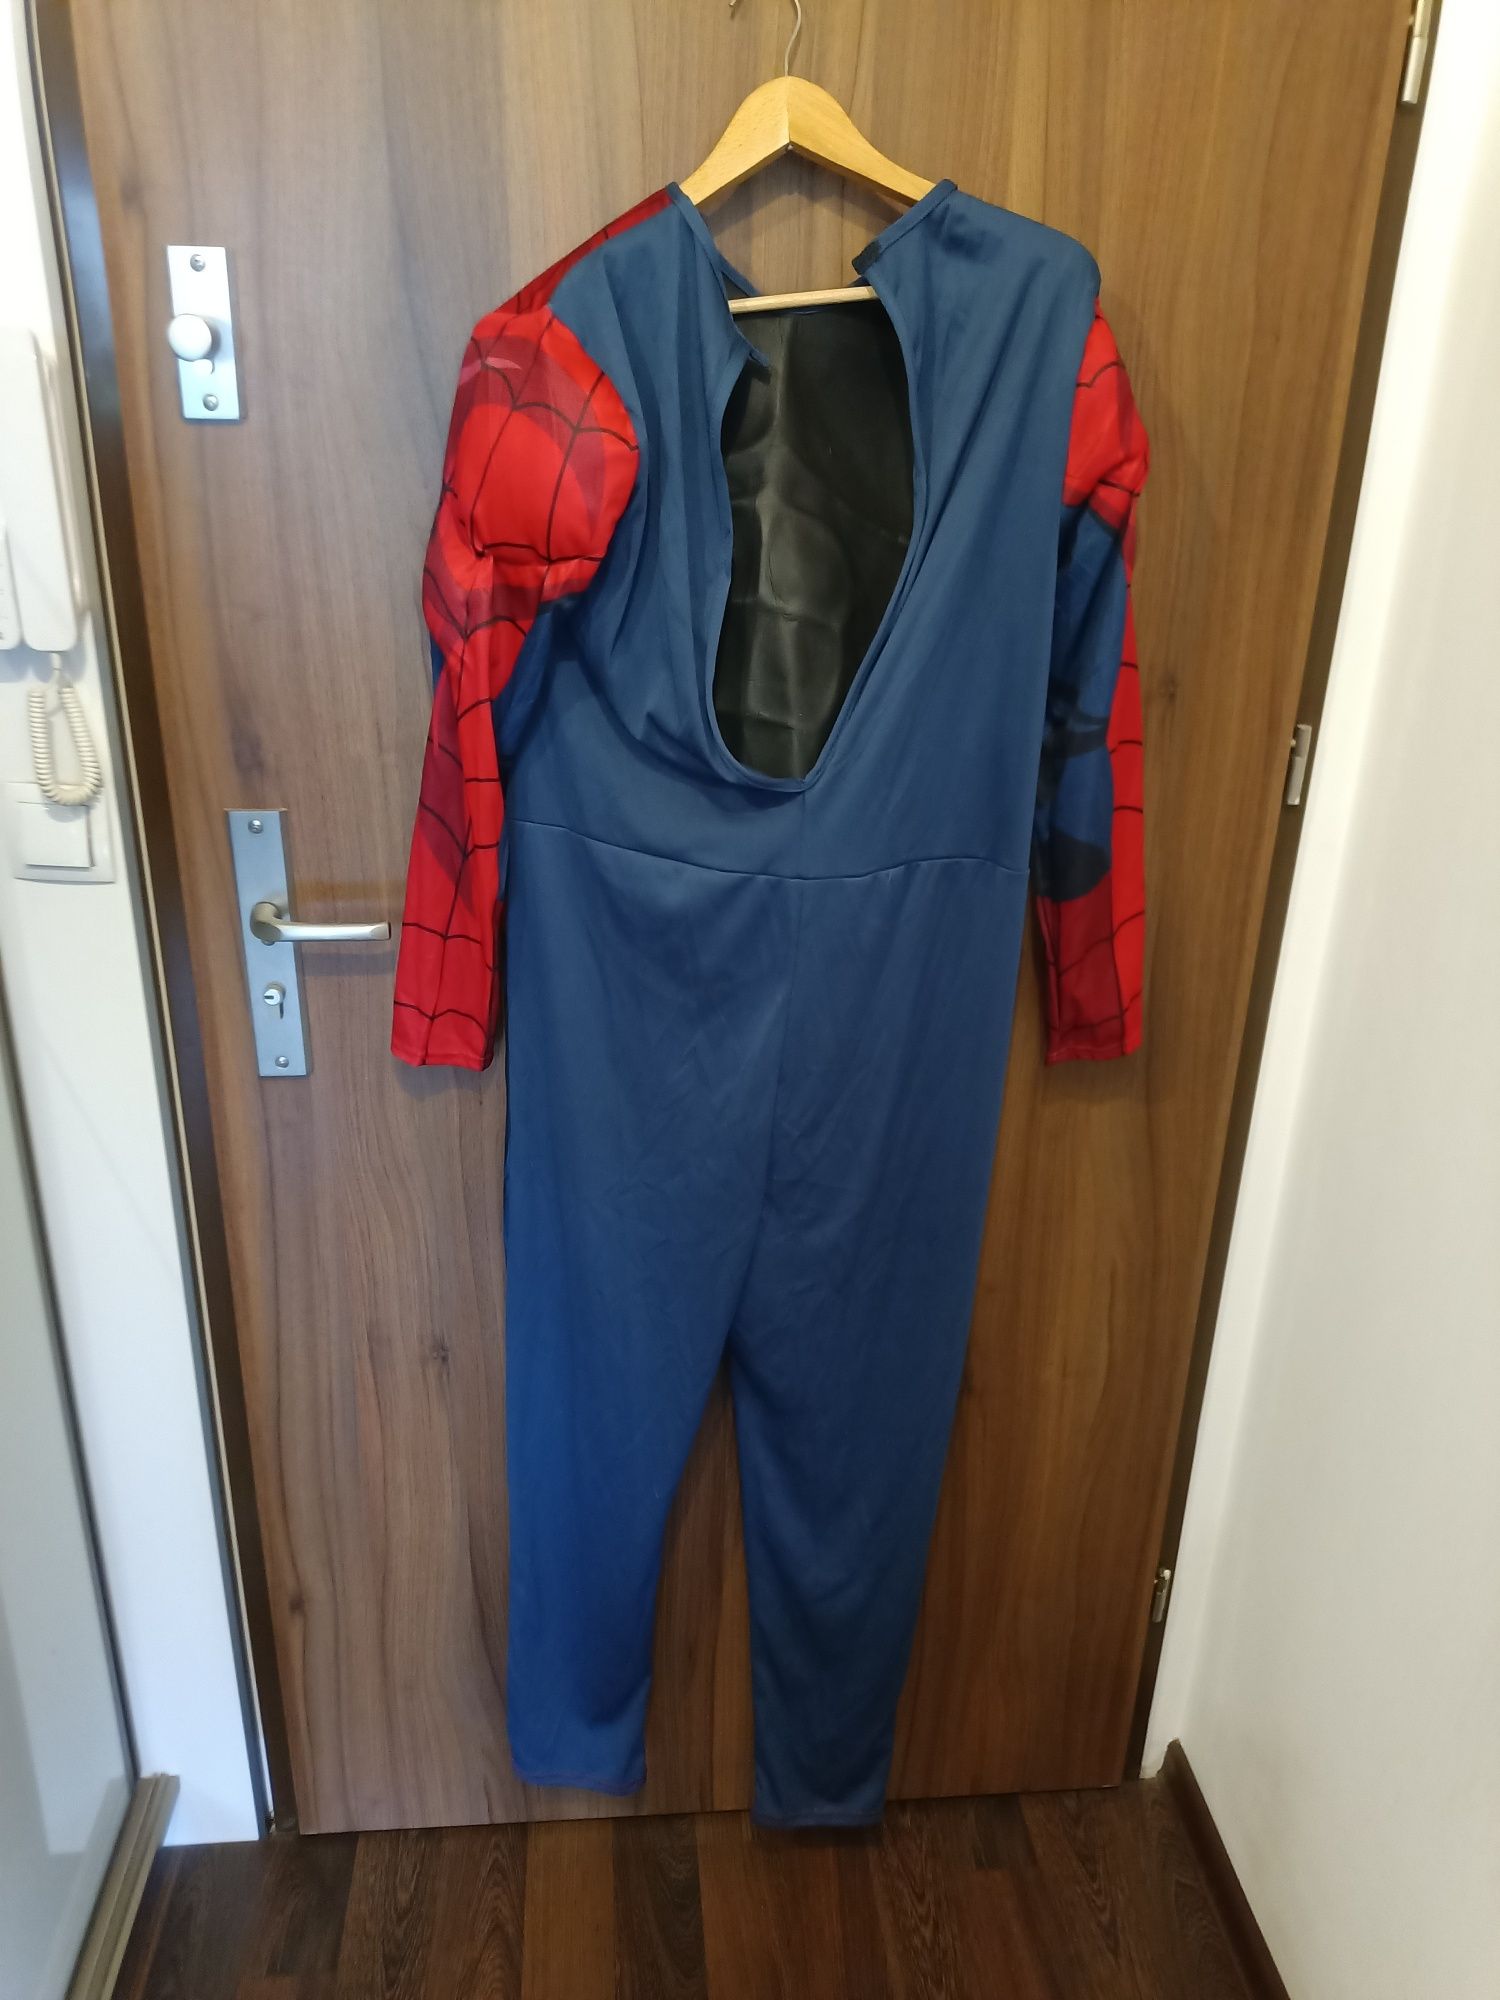 Kostium Spidermana dla dorosłych. Marvel